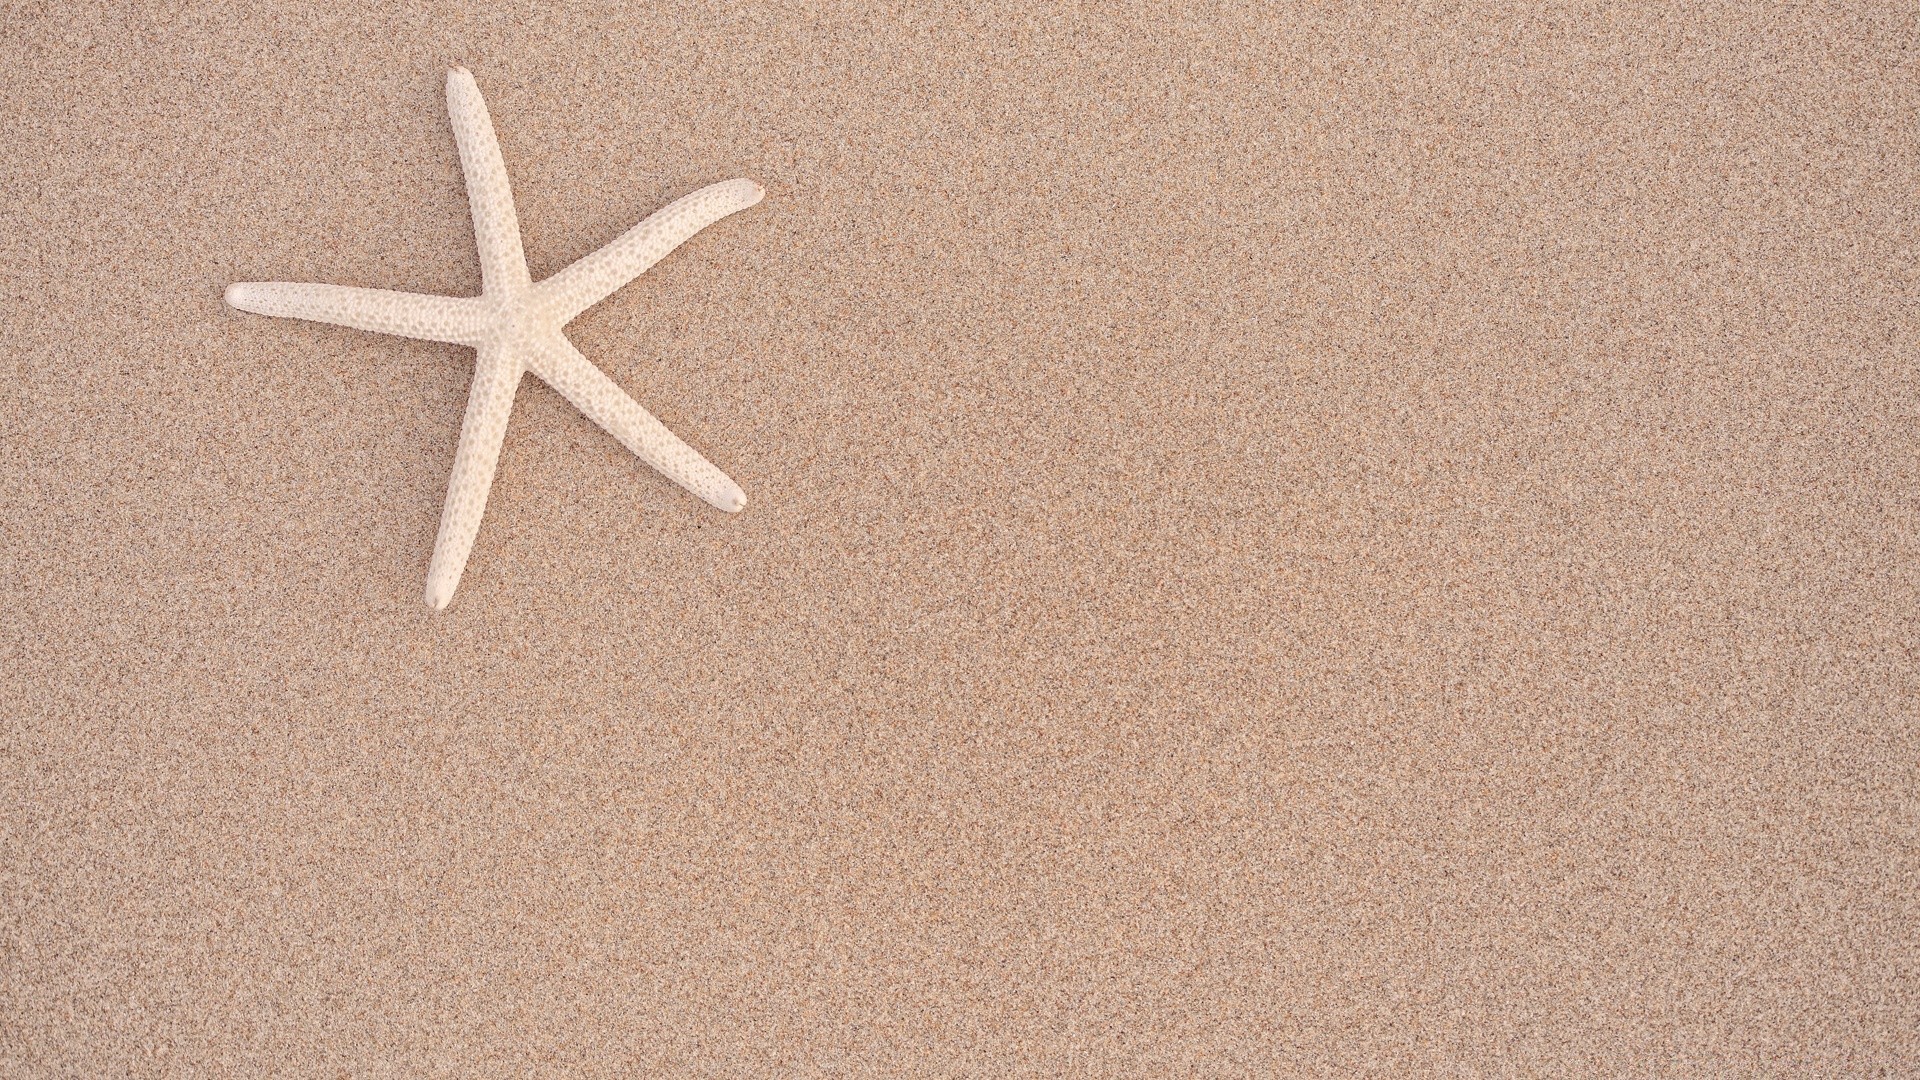 amphibians starfish sand beach seashore echinoderm seashell shell empty travel